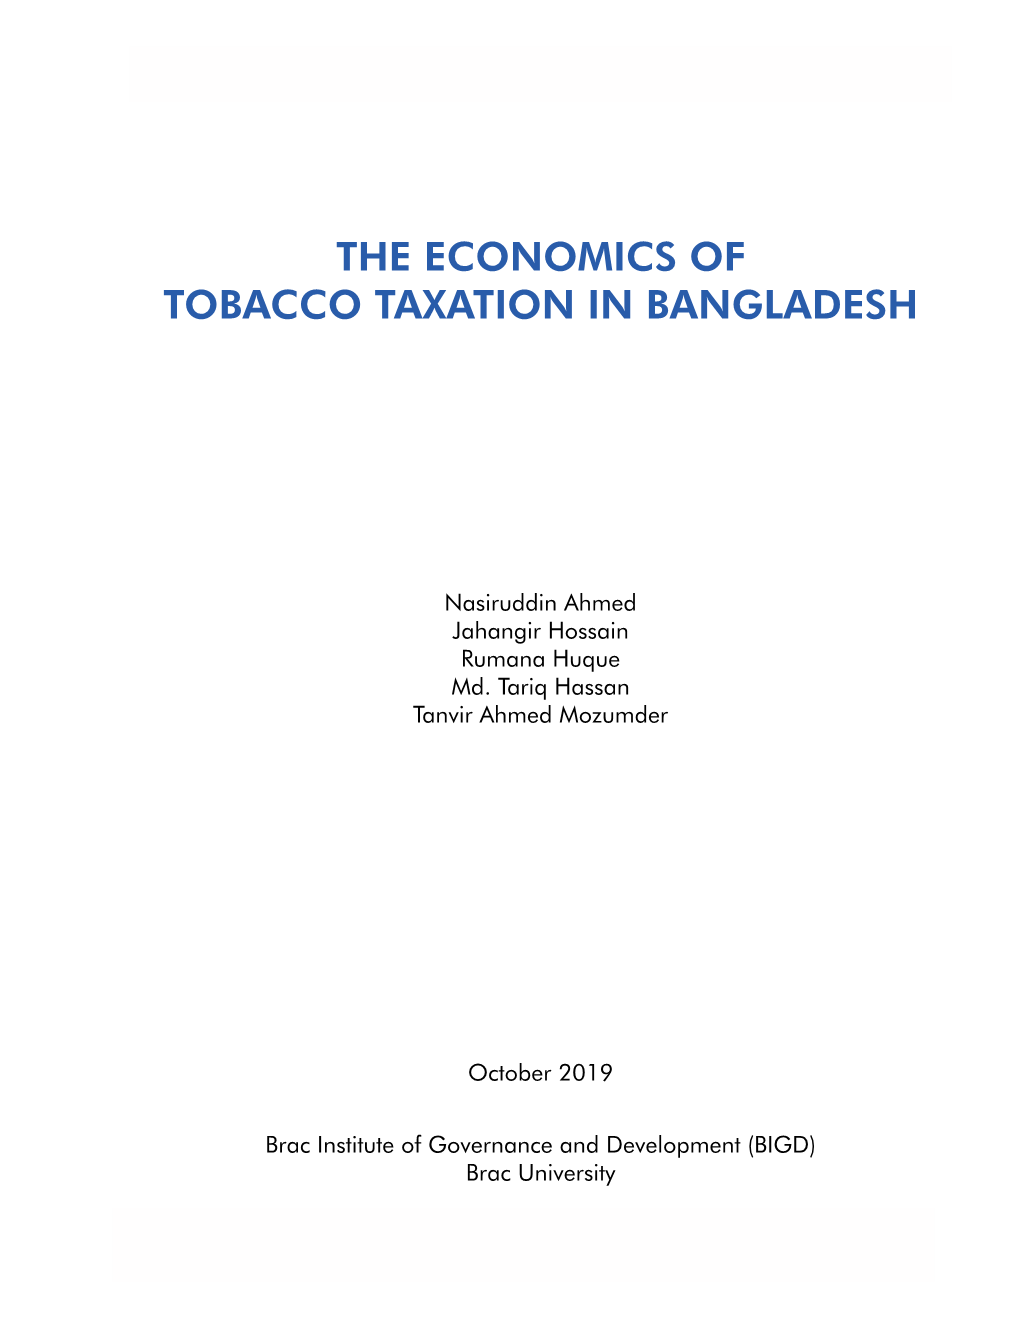 The Economics of Tobacco Taxation in Bangladesh